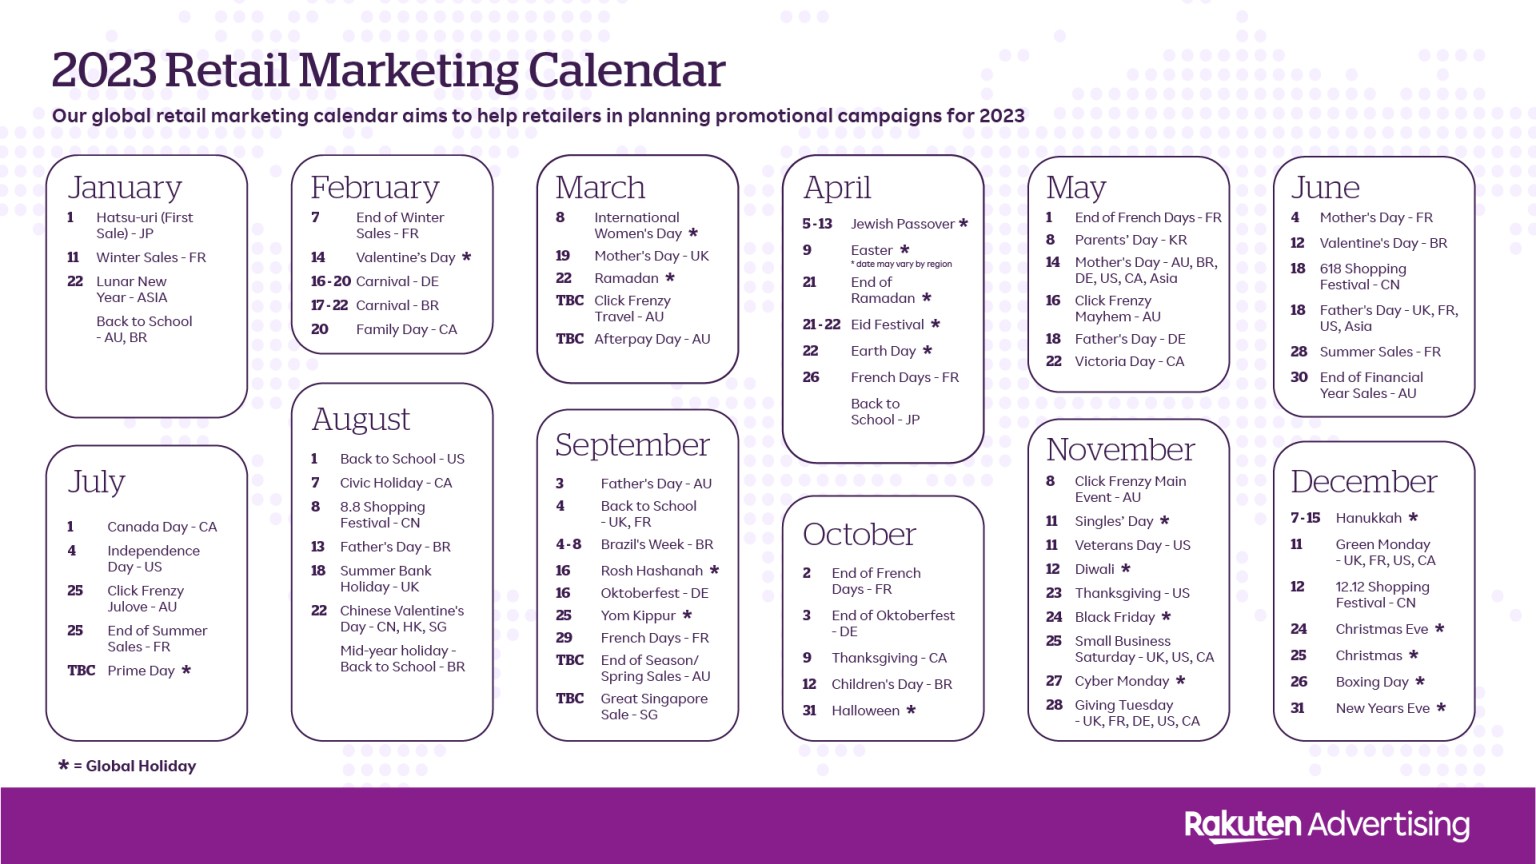 Retail Marketing Calendar Your Survival Guide to 2023 Rakuten